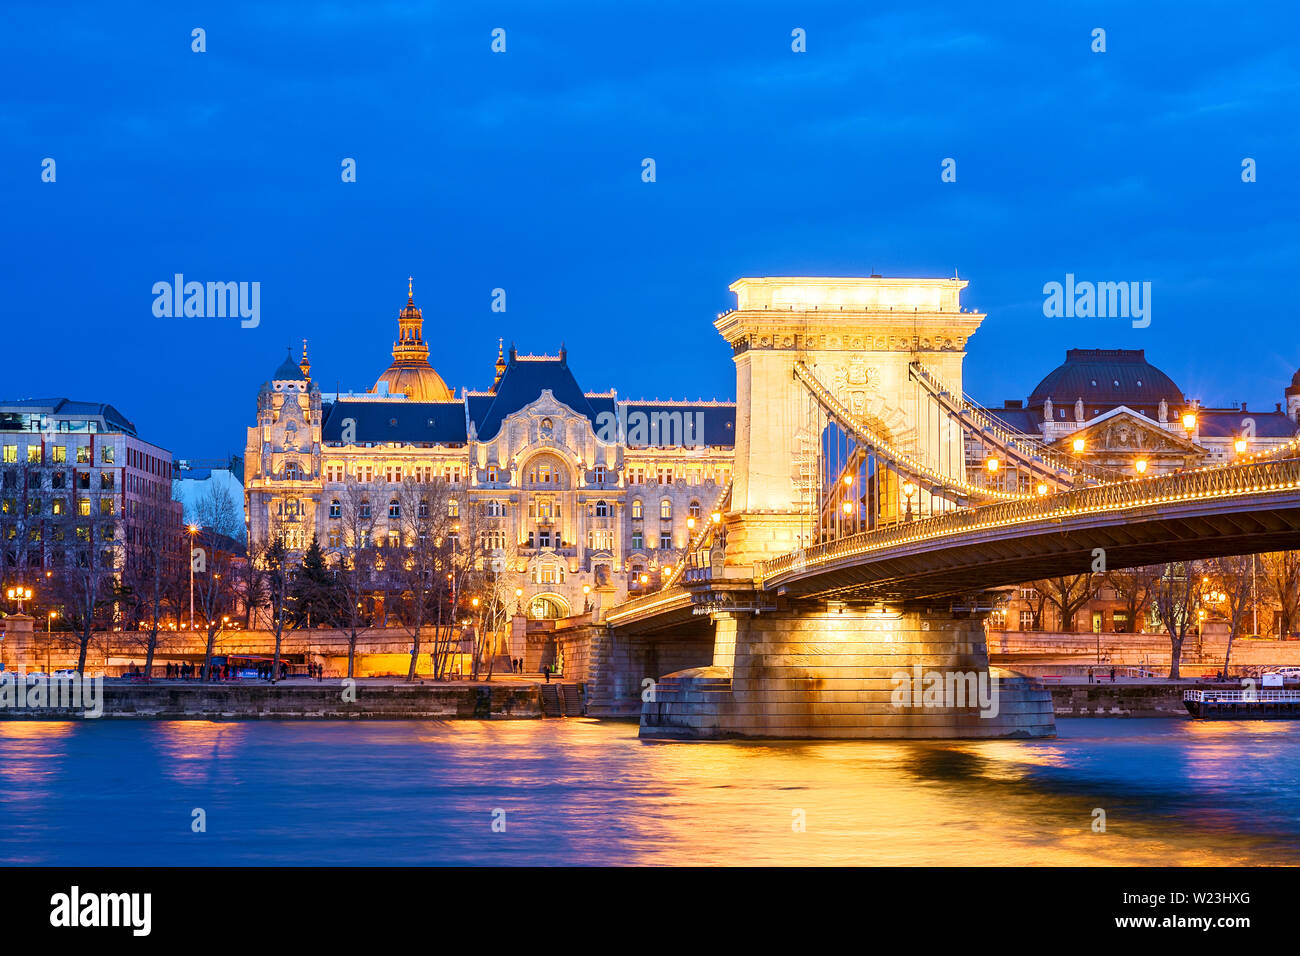 Chain Bridge Budapest Szechenyi Lanchid Gresham Palace Four Seasons Hotel Danube River Hungary Stock Photo